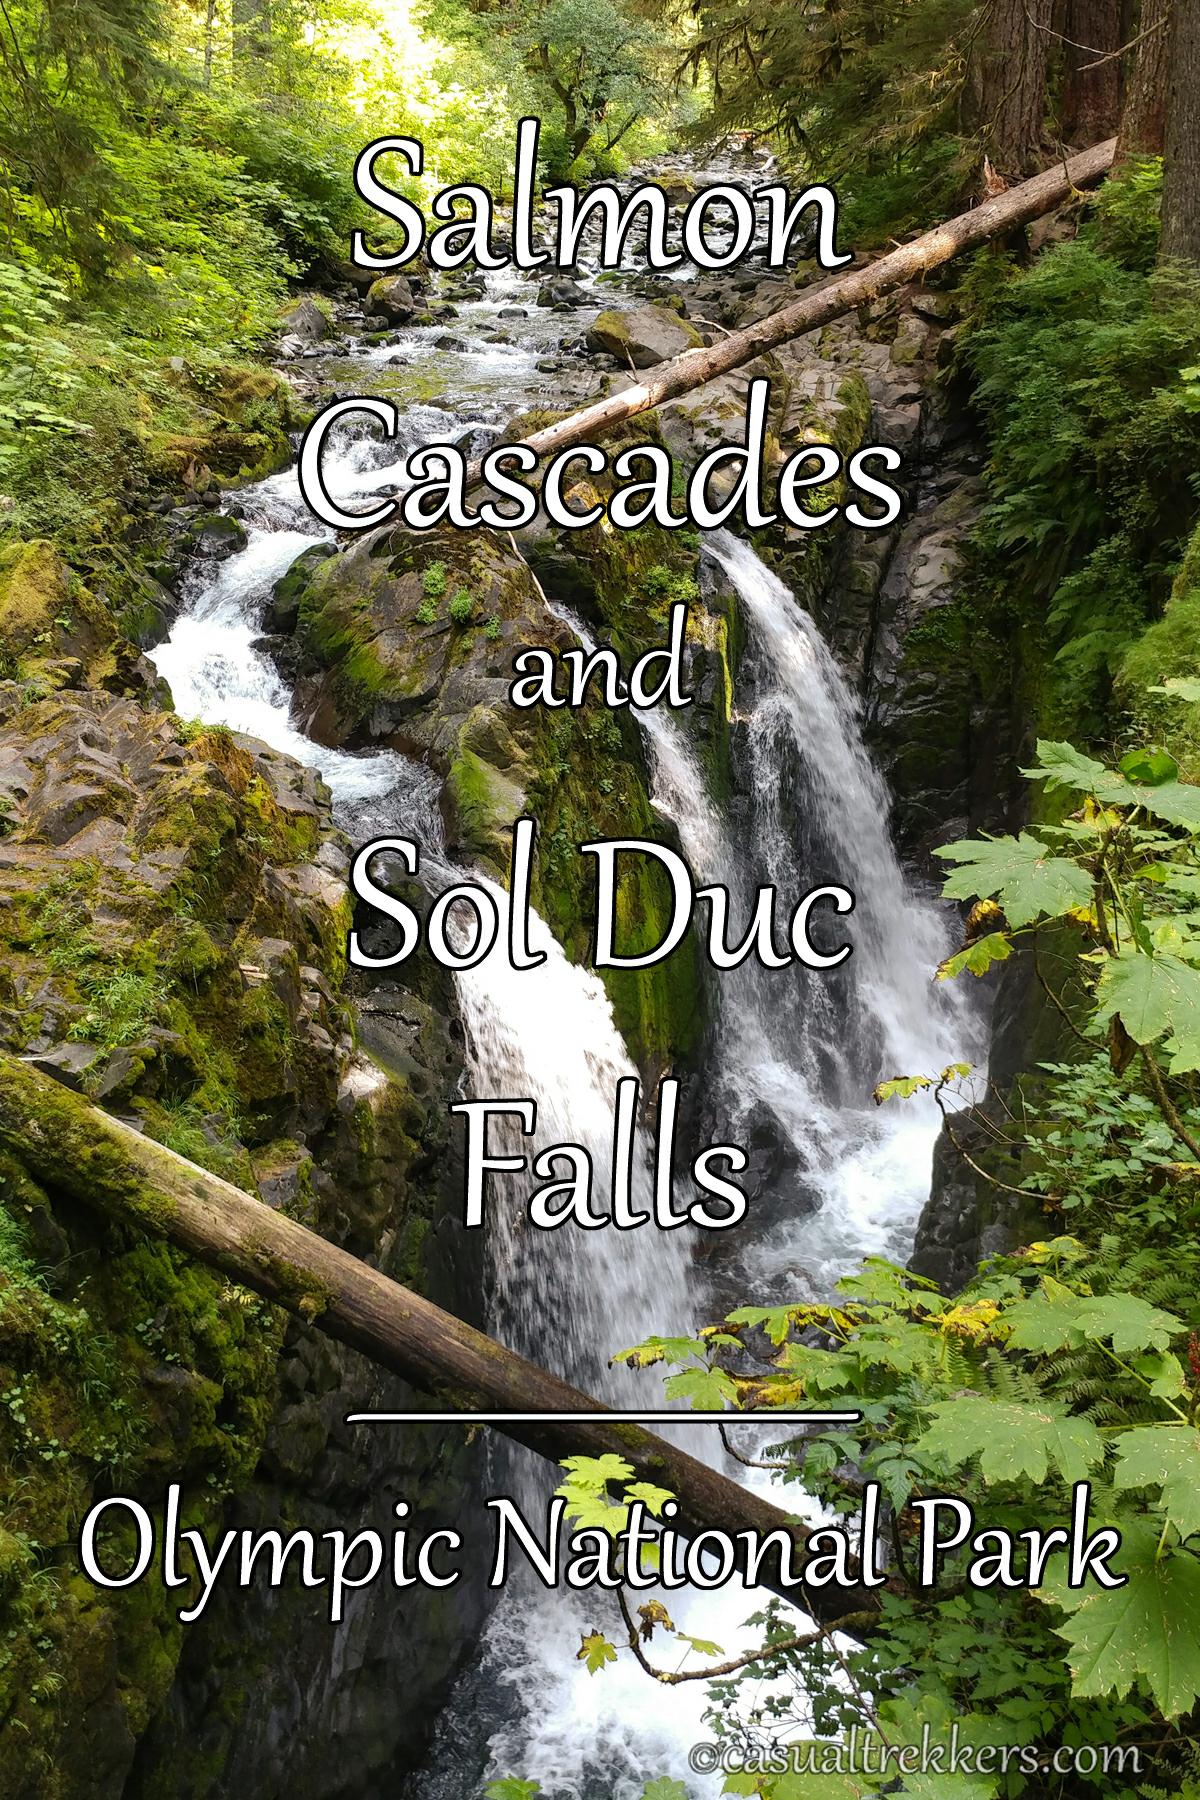 Sol Duc Falls and Salmon Cascades